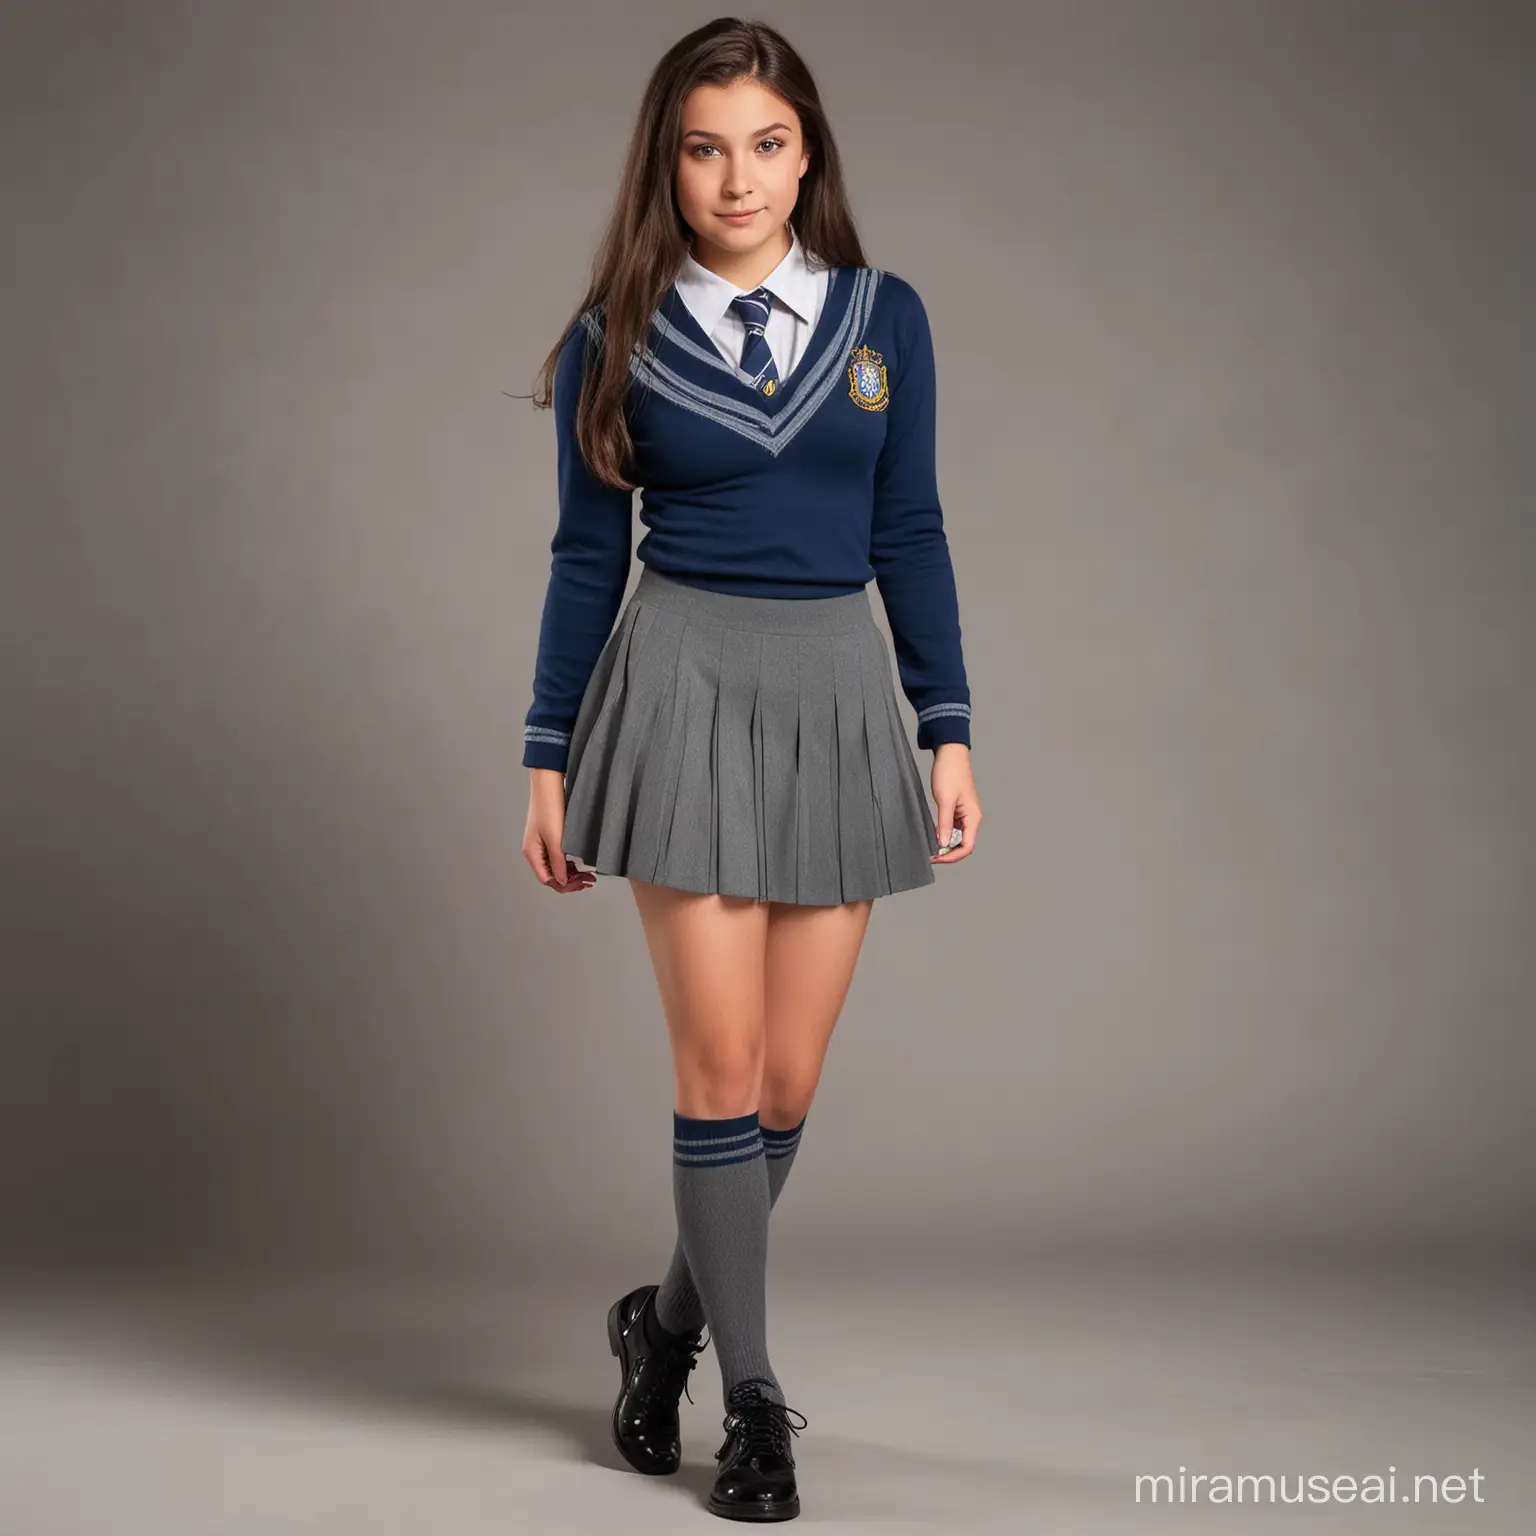 Ravenclaw Student Portrait Teen Girl in Uniform with Dark Brown Hair